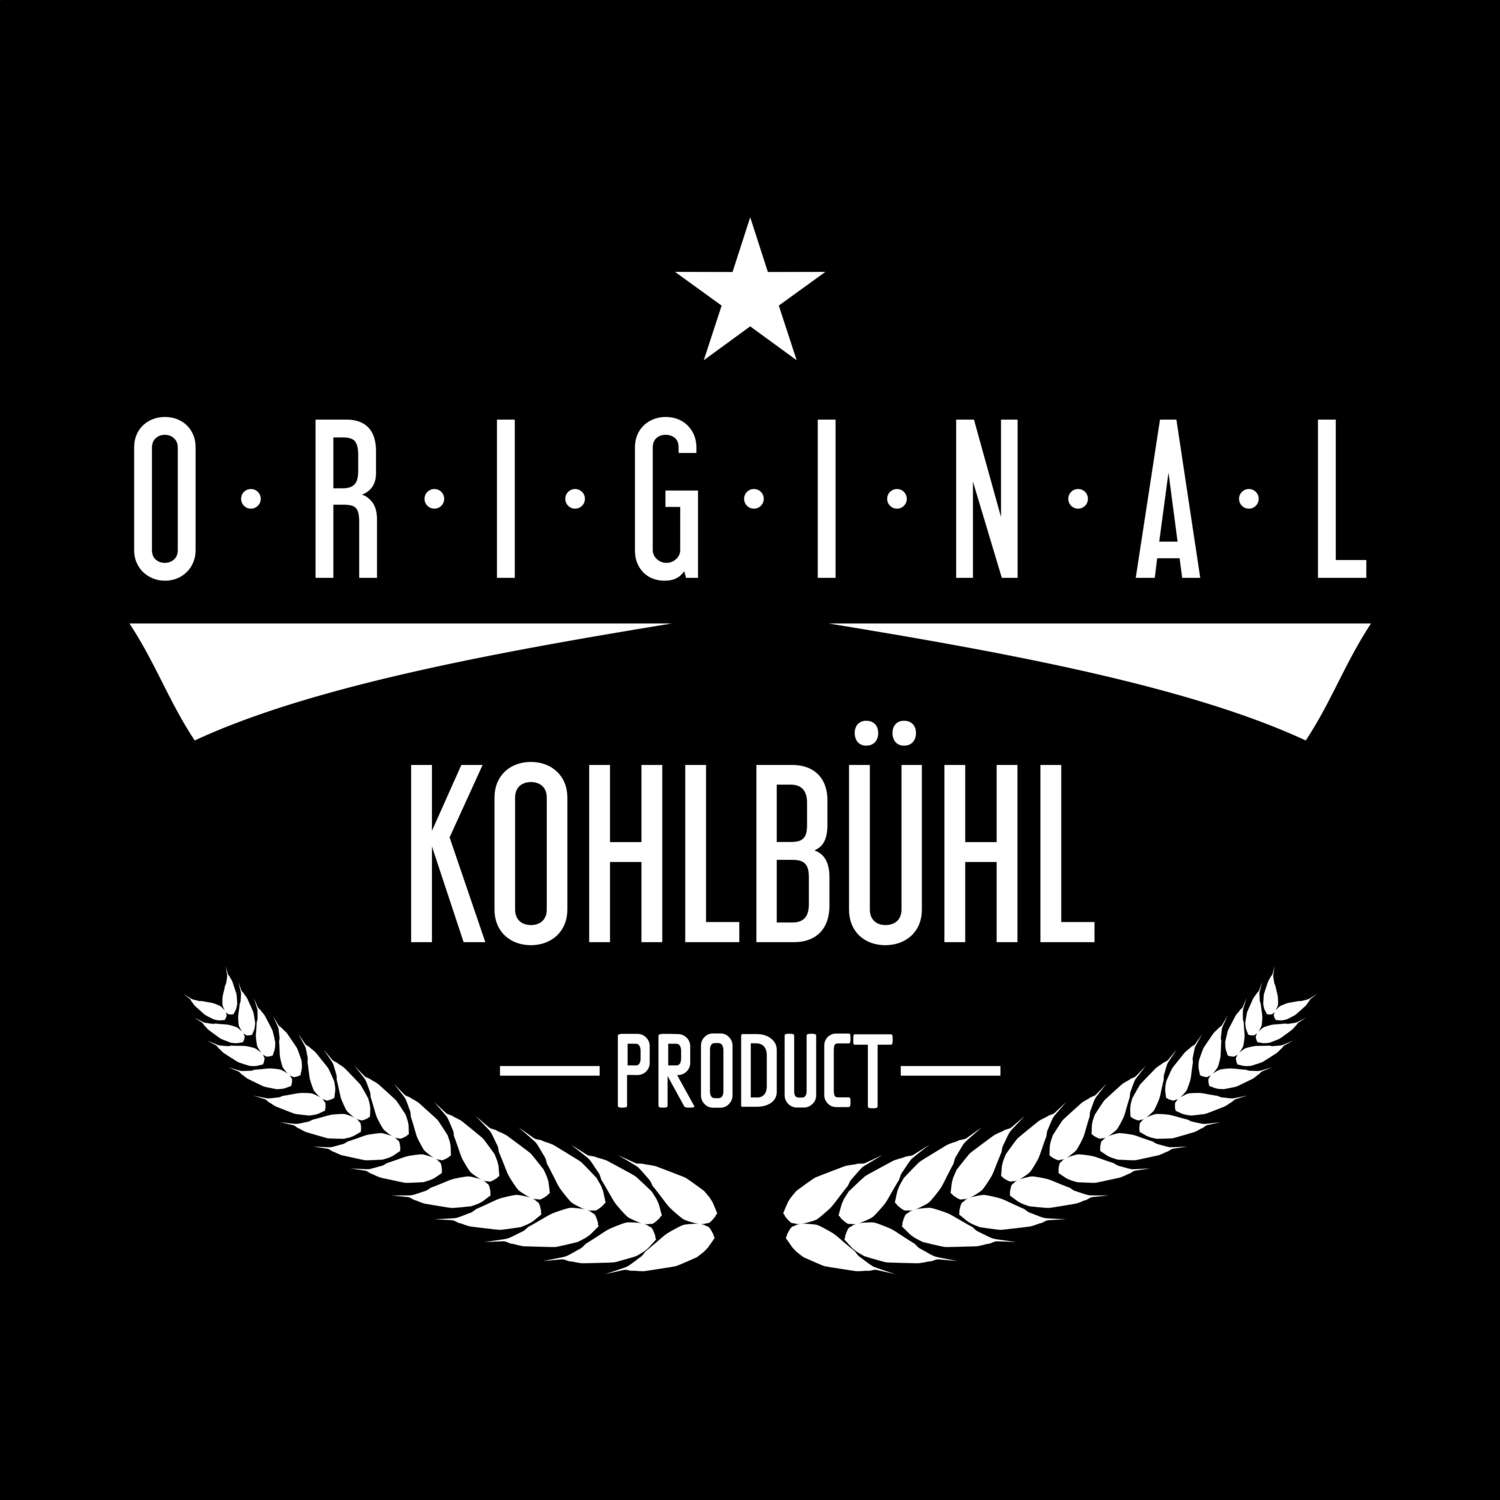 Kohlbühl T-Shirt »Original Product«